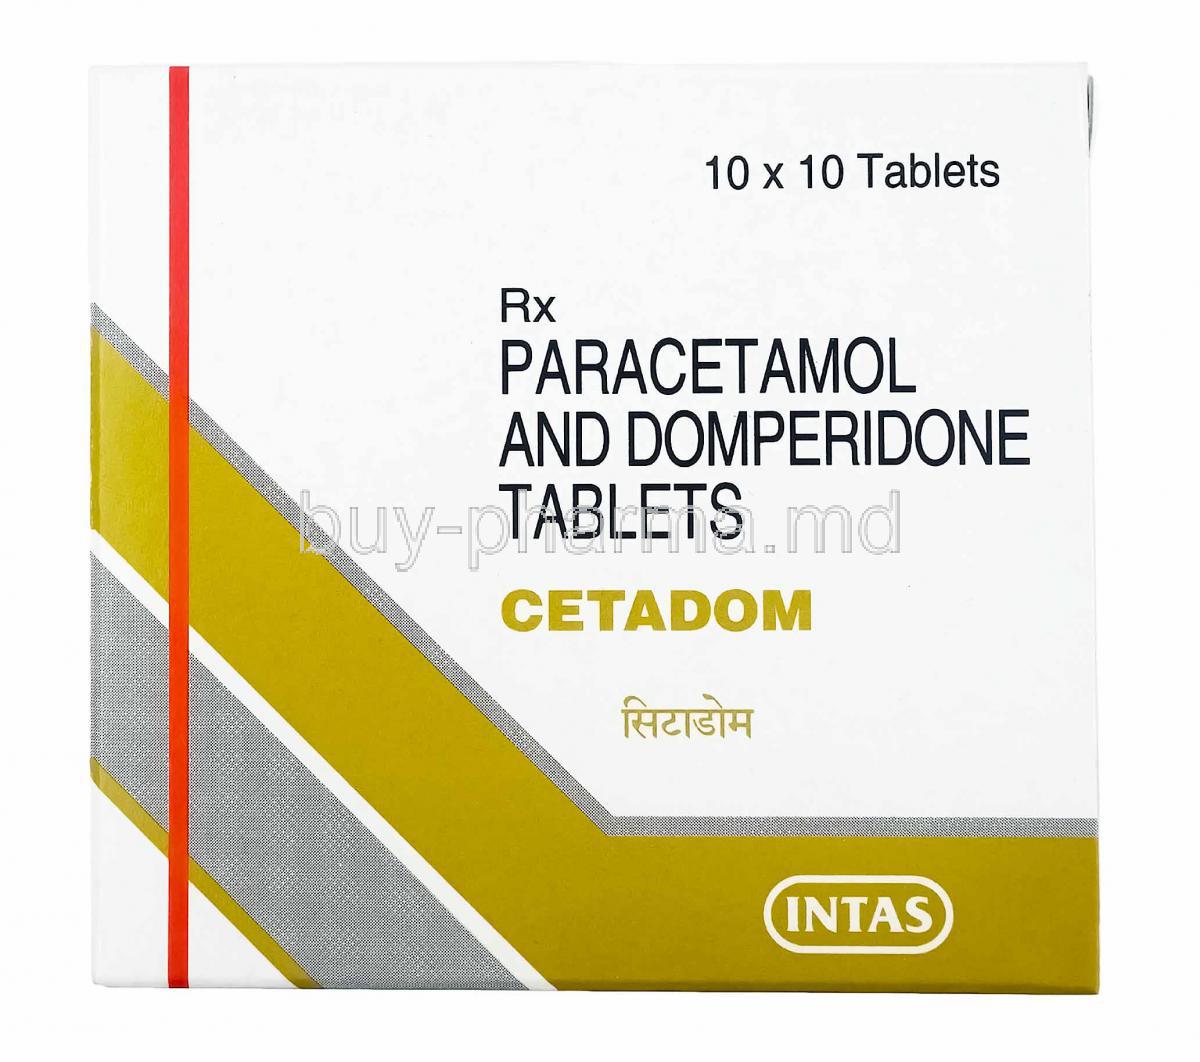 Cetadom, Domperidone and Paracetamol